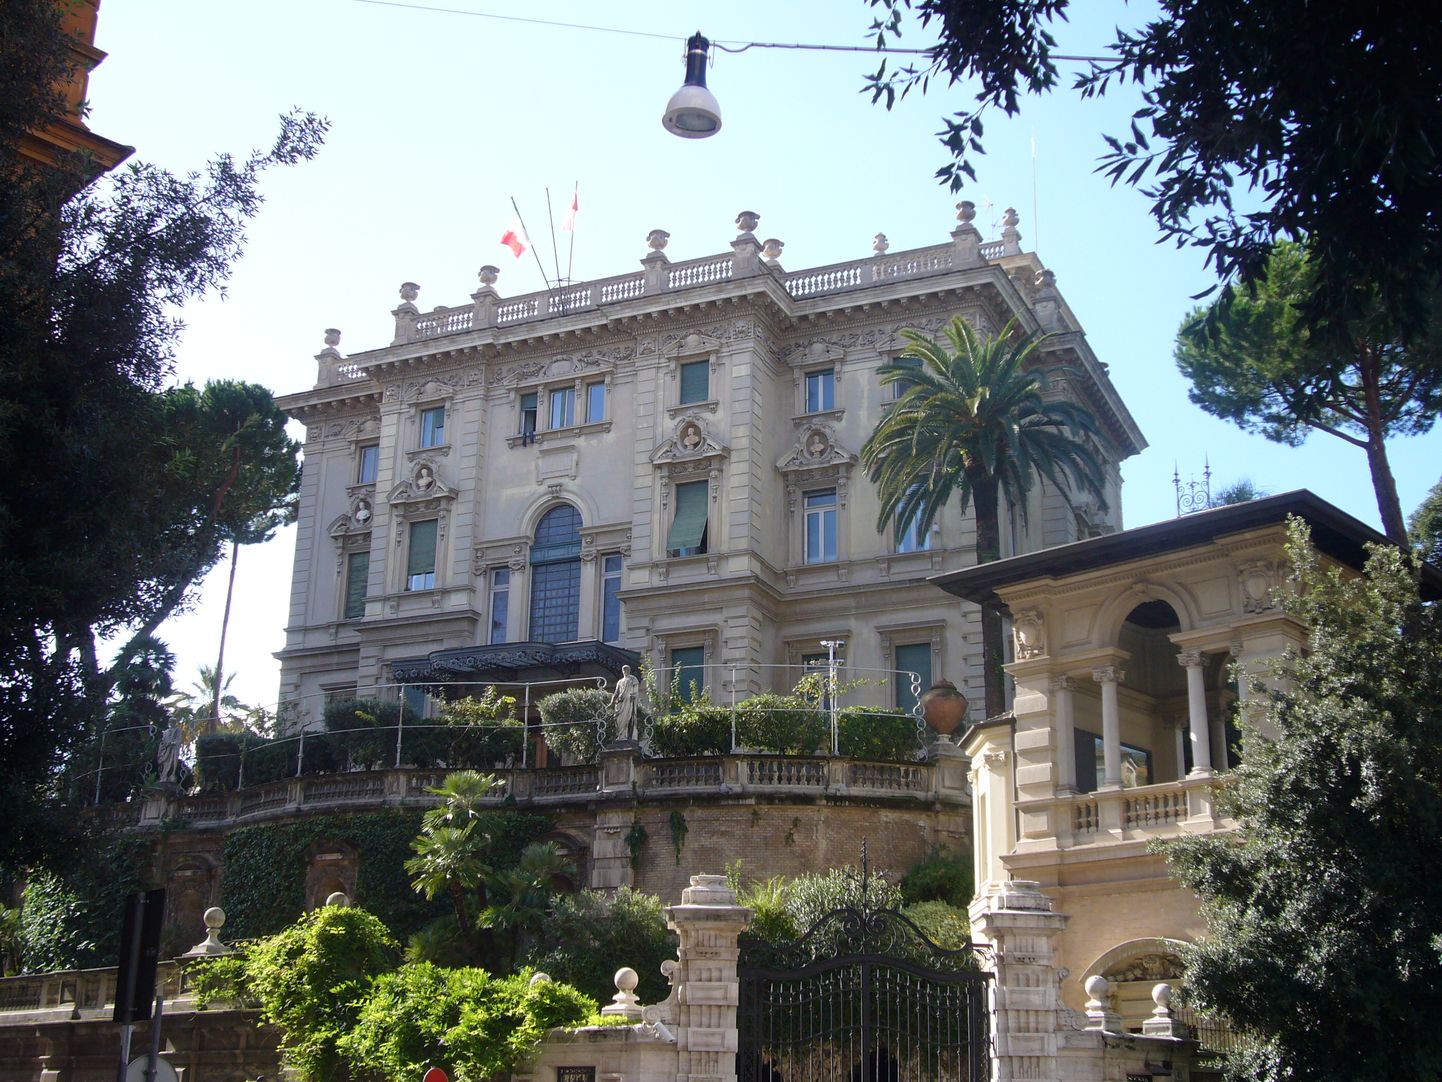 Villa Aurora.